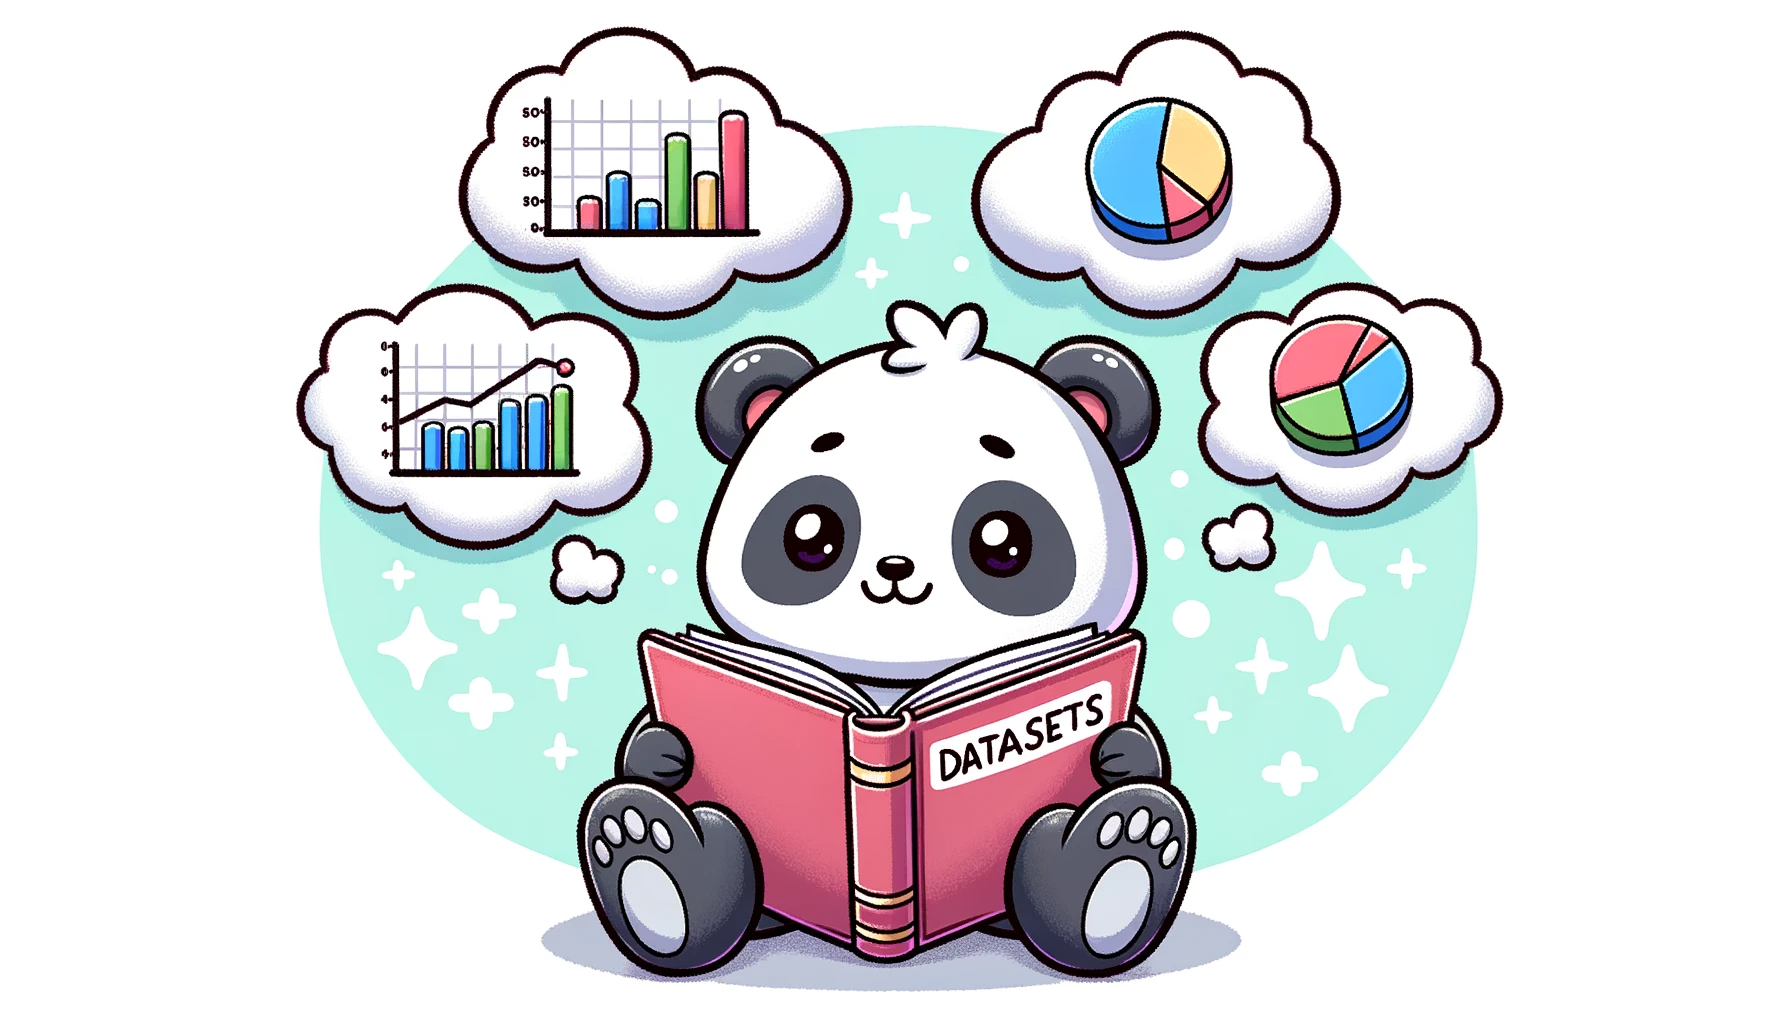 How to Convert a Scikit-Learn Dataset to a Pandas DataFrame